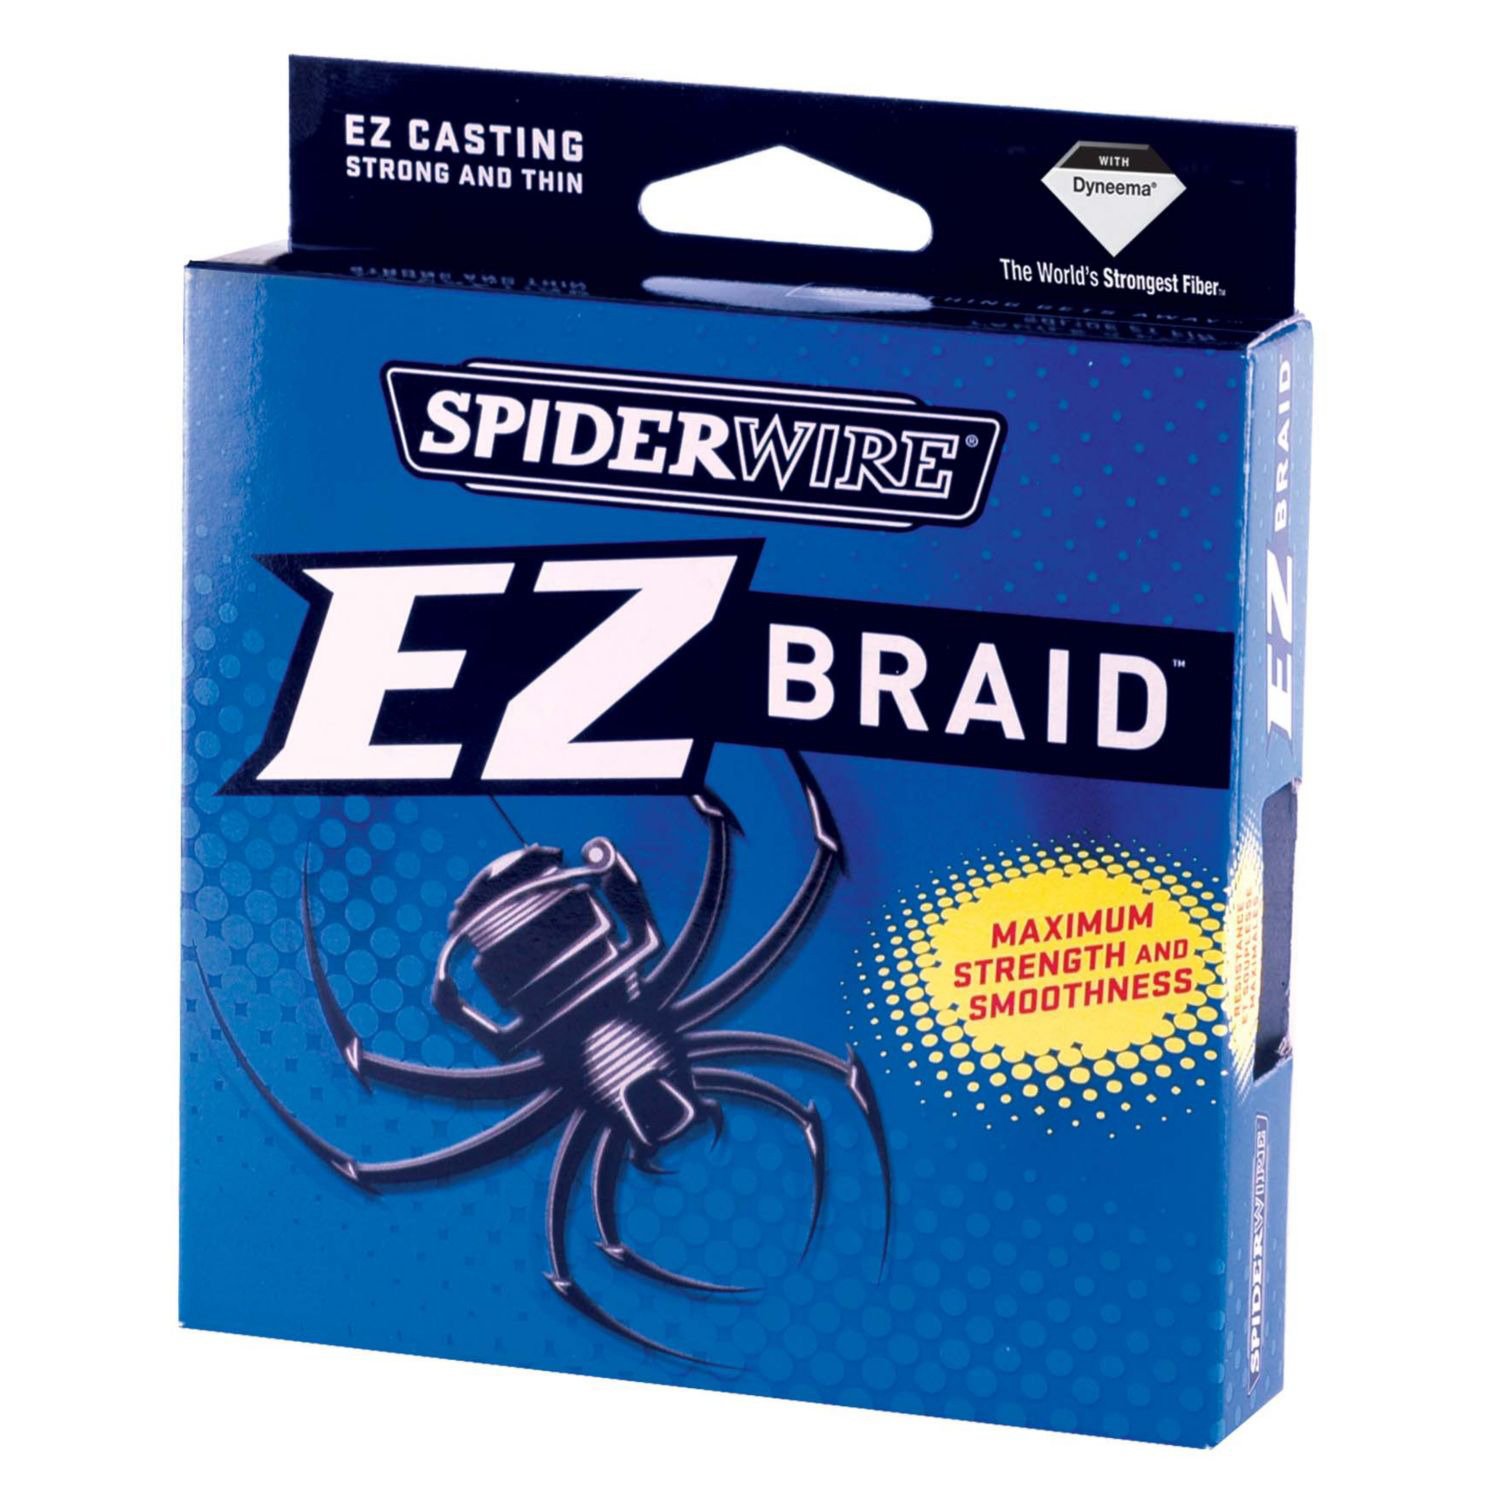 Spiderwire® EZ Braid™ 15 lb. - 300 yards Braided Fishing Line